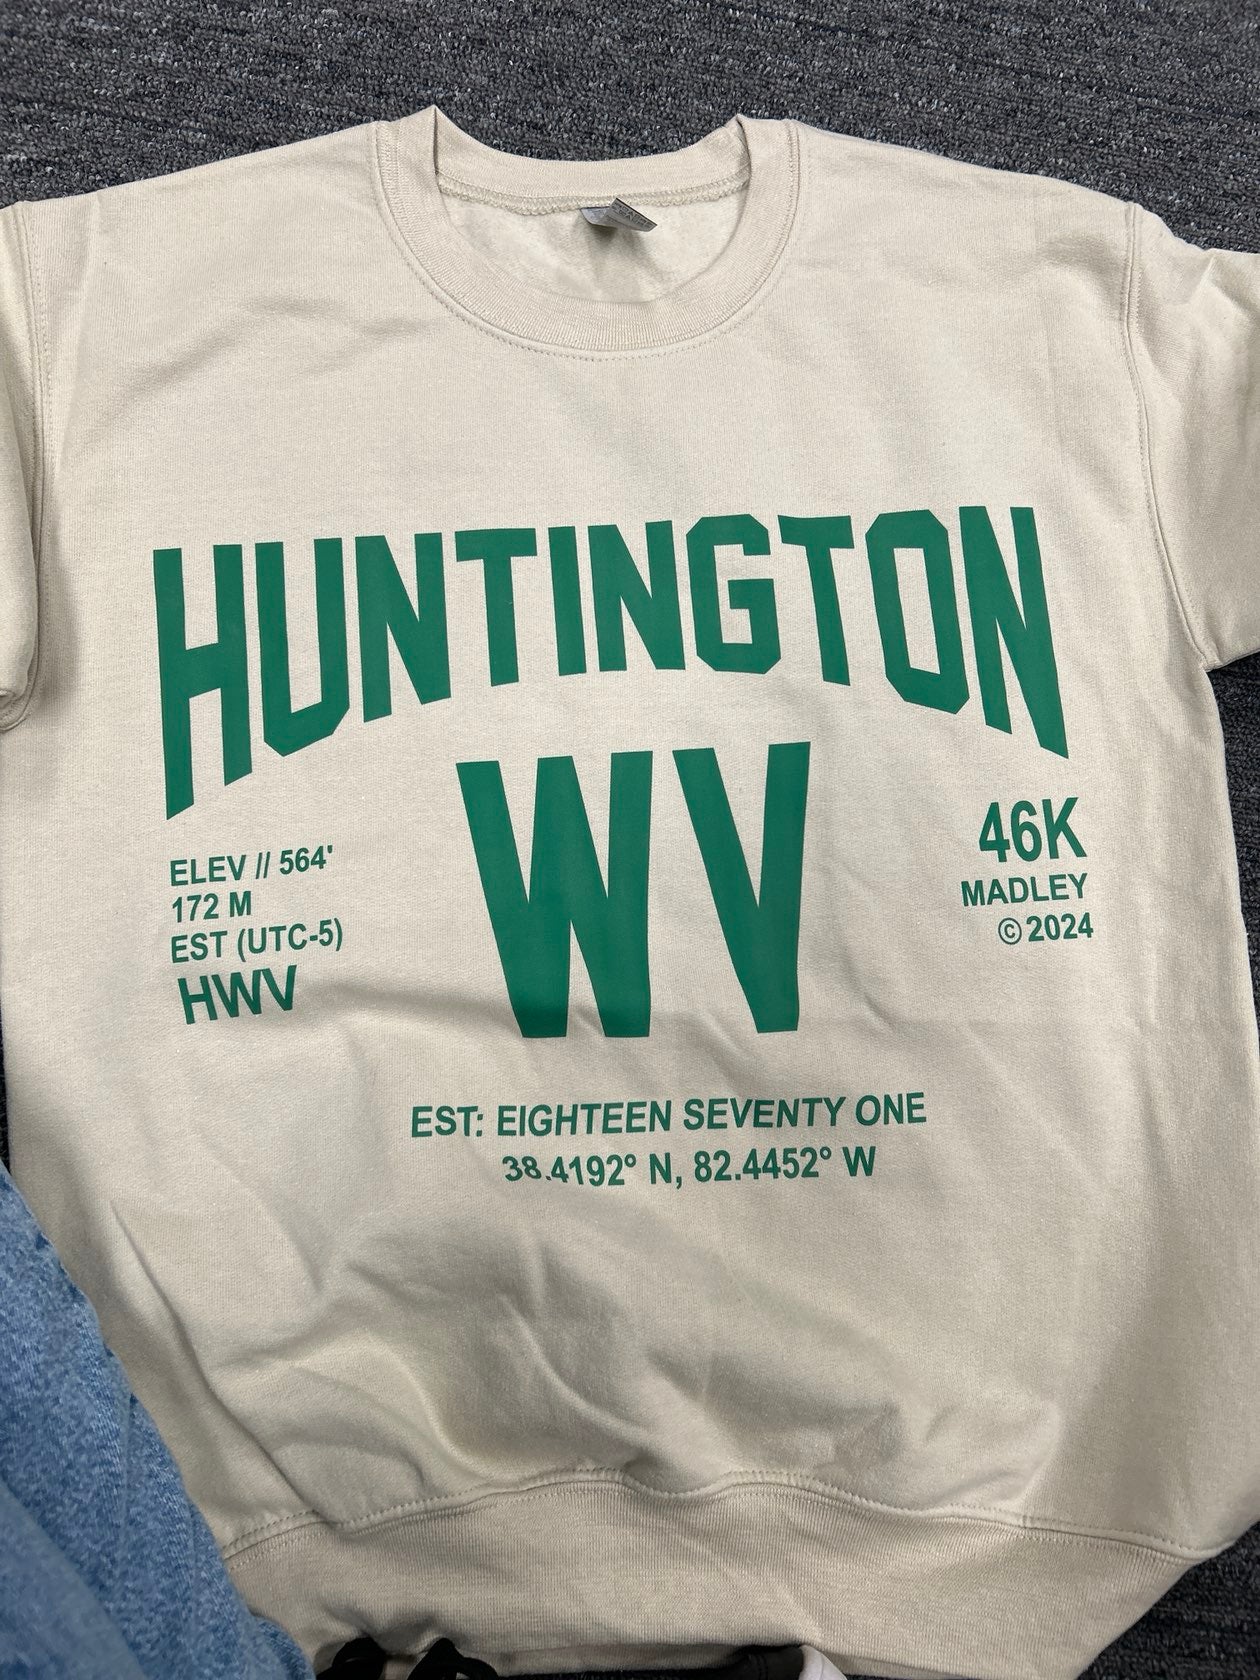 HUNTINGTON WV CREW